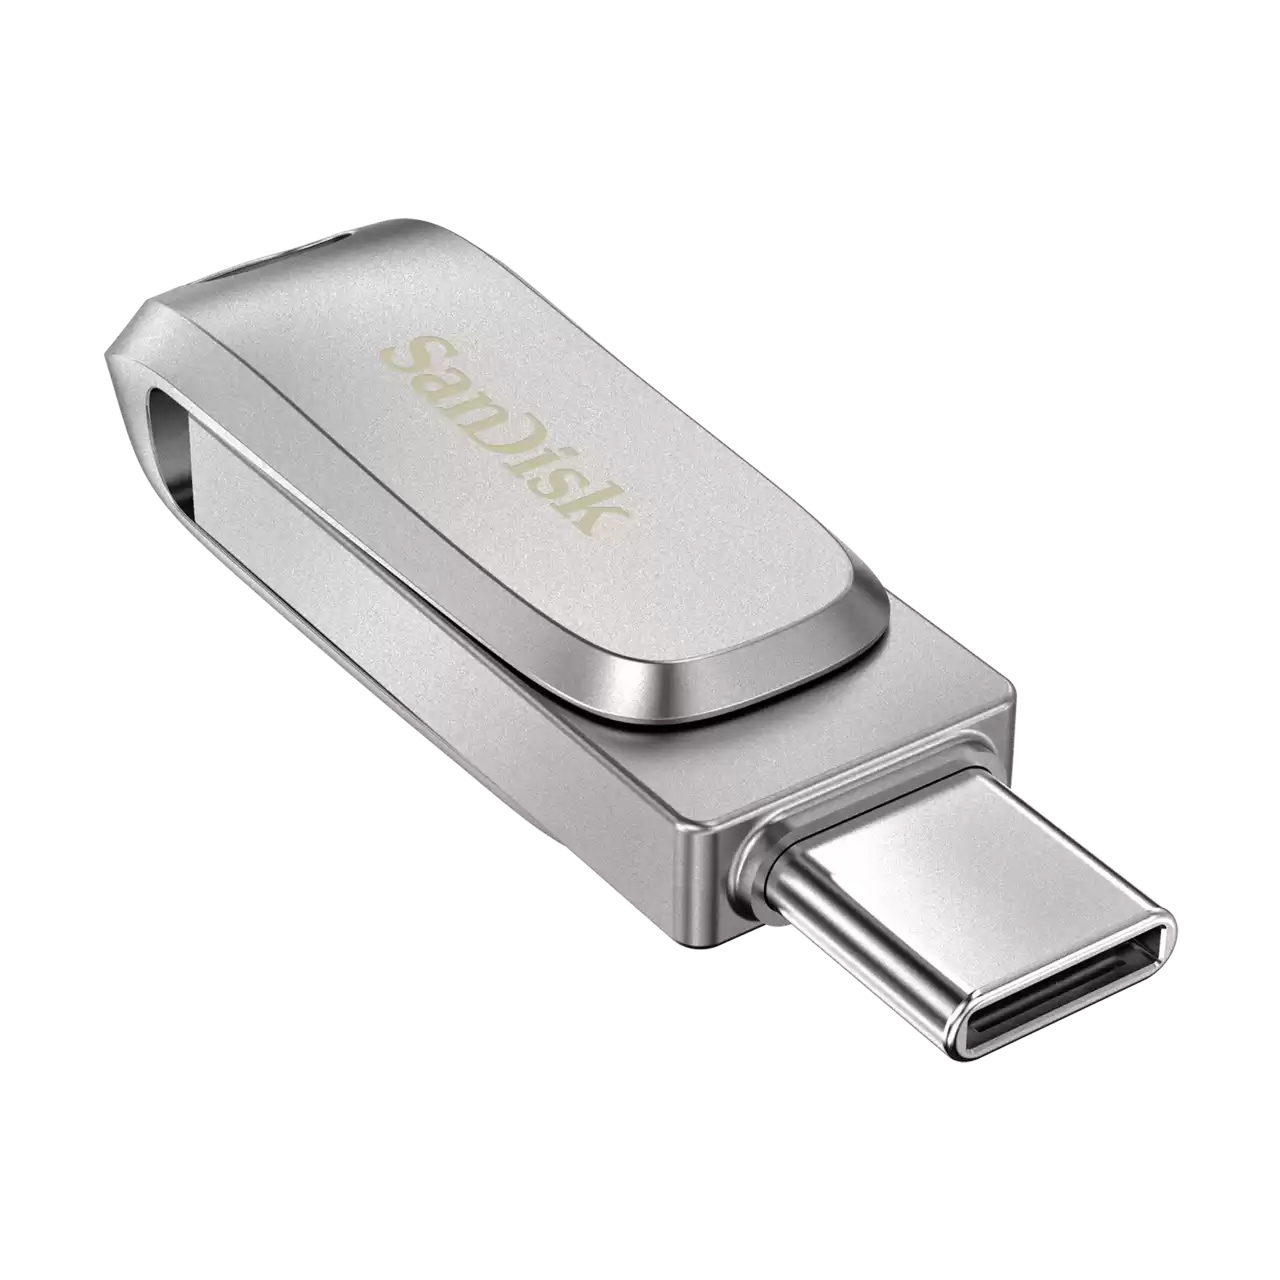 USB SanDisk Ultra Dual Drive USB Type-C